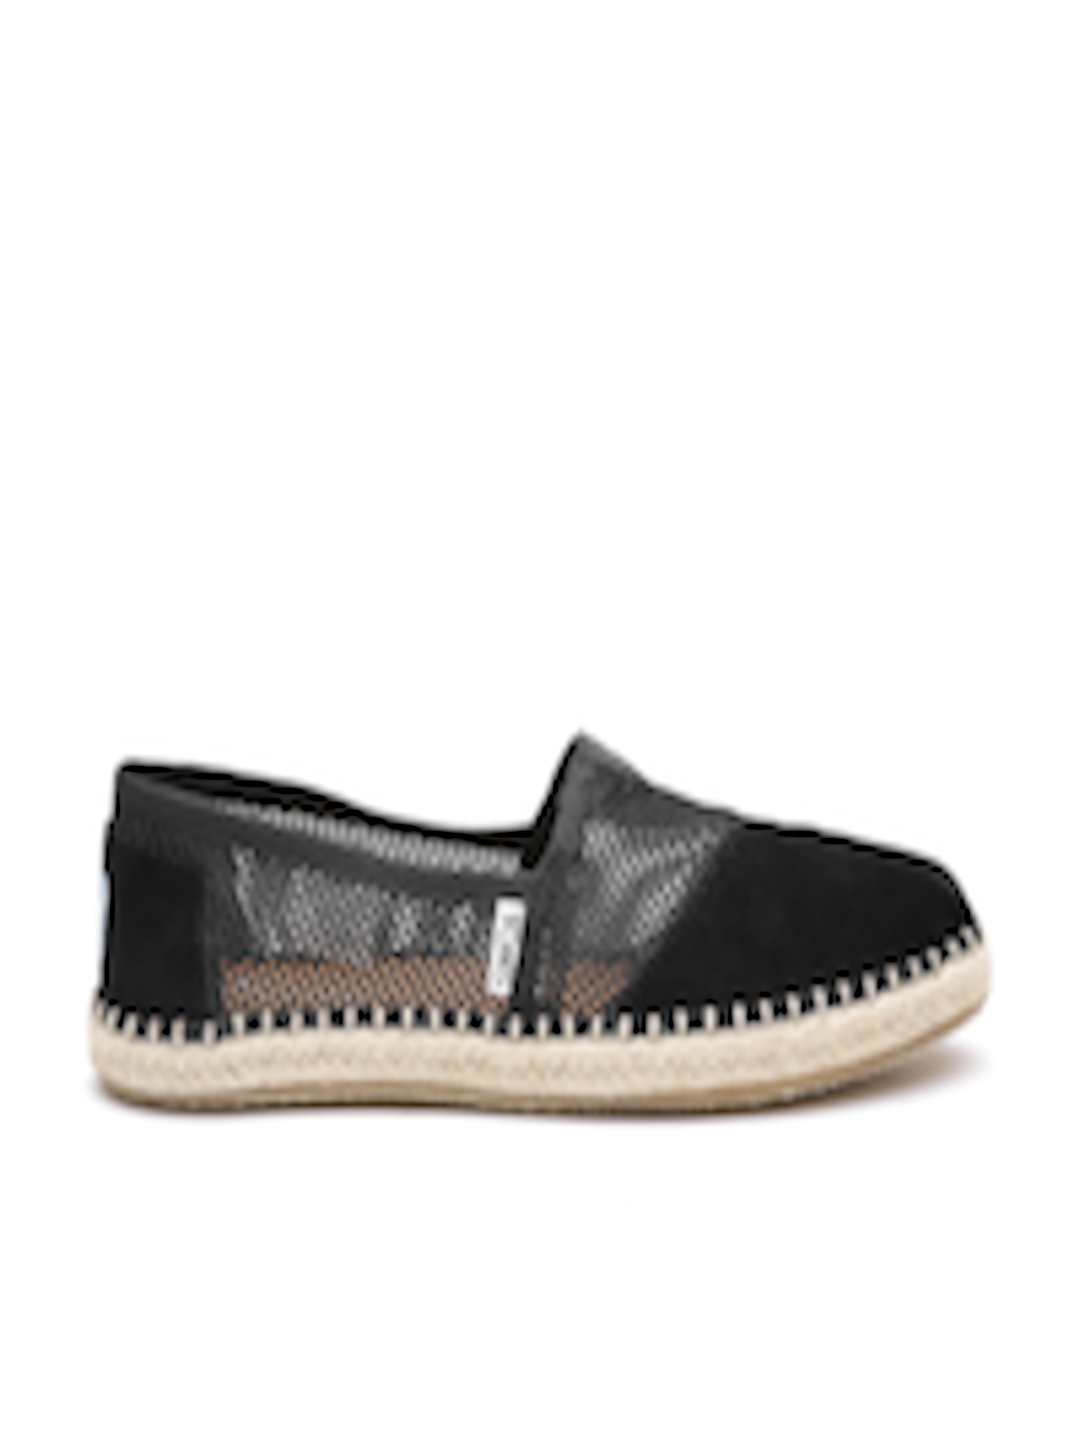 Buy TOMS Women Black Mesh Espadrilles - Casual Shoes for Women 1423699 ...